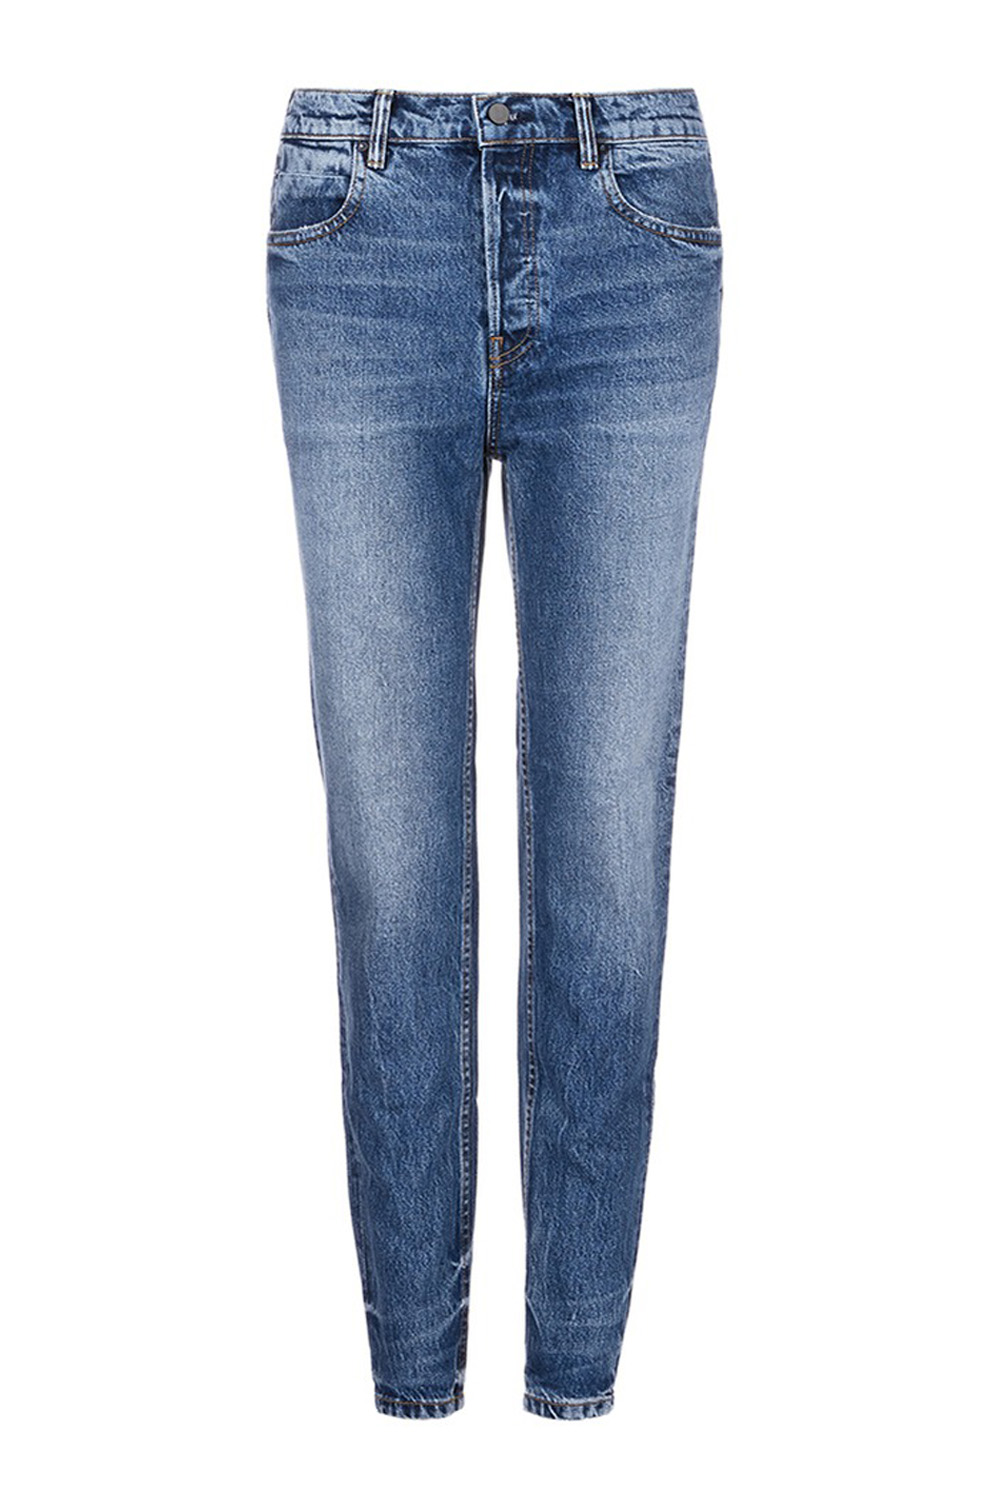 Selena Gomez get the look. Alexander Wang jeans, $149, from Workshop.